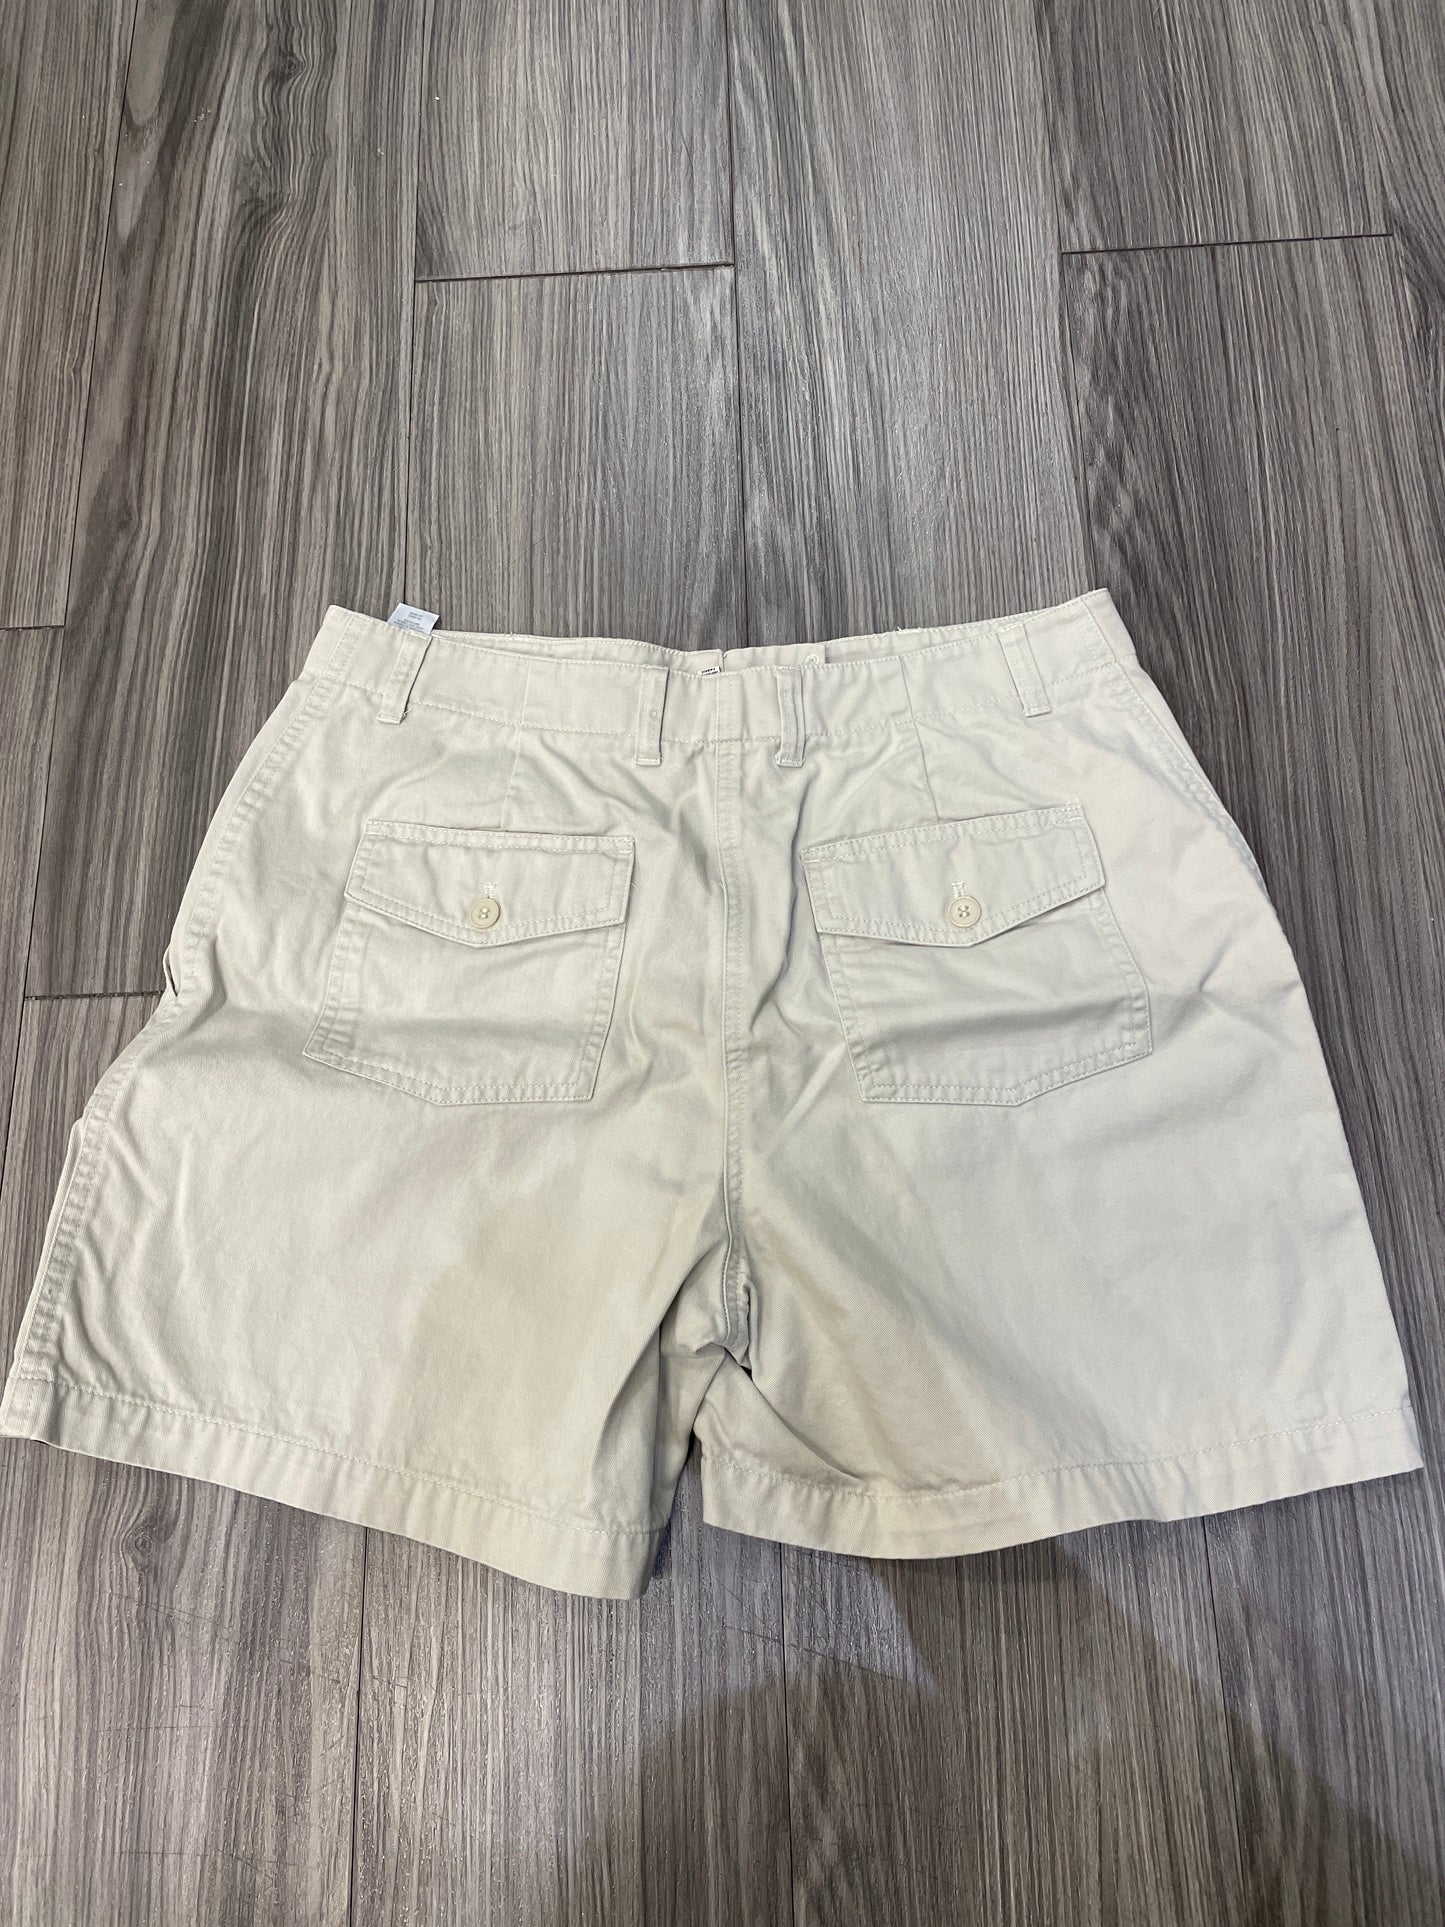 Shorts By Jones New York  Size: 12